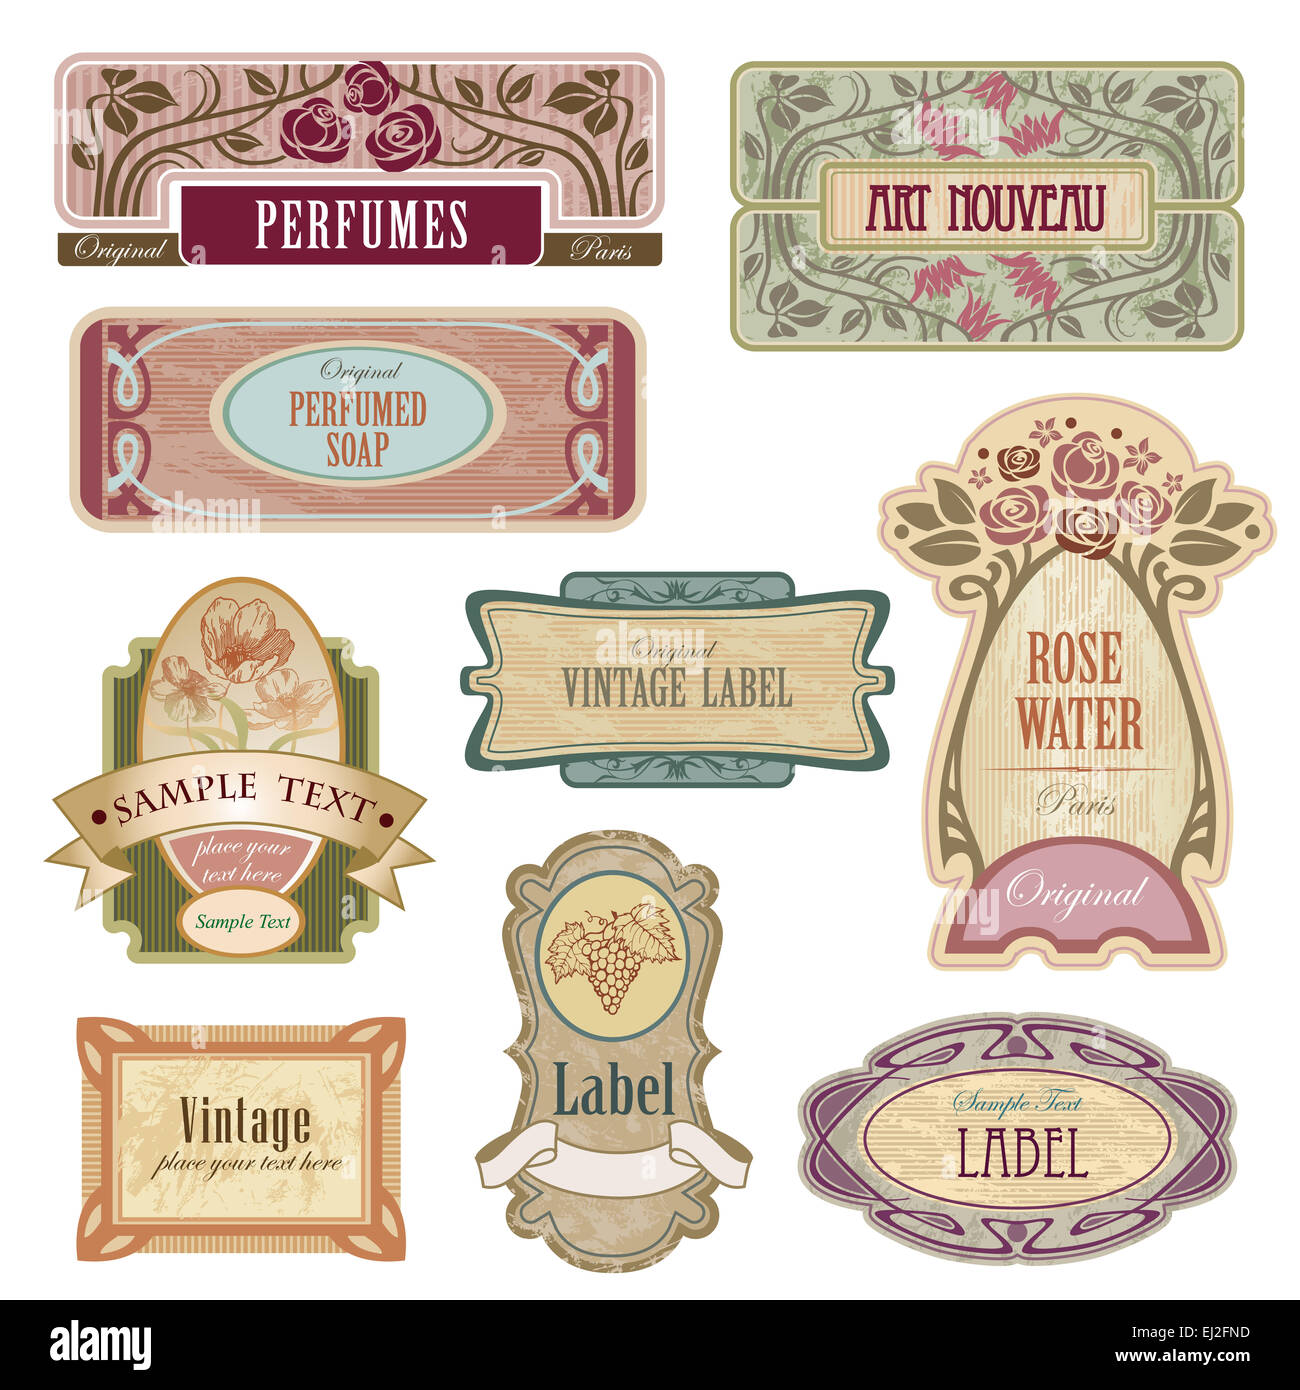 Ornate vintage labels in style Art Nouveau Stock Image